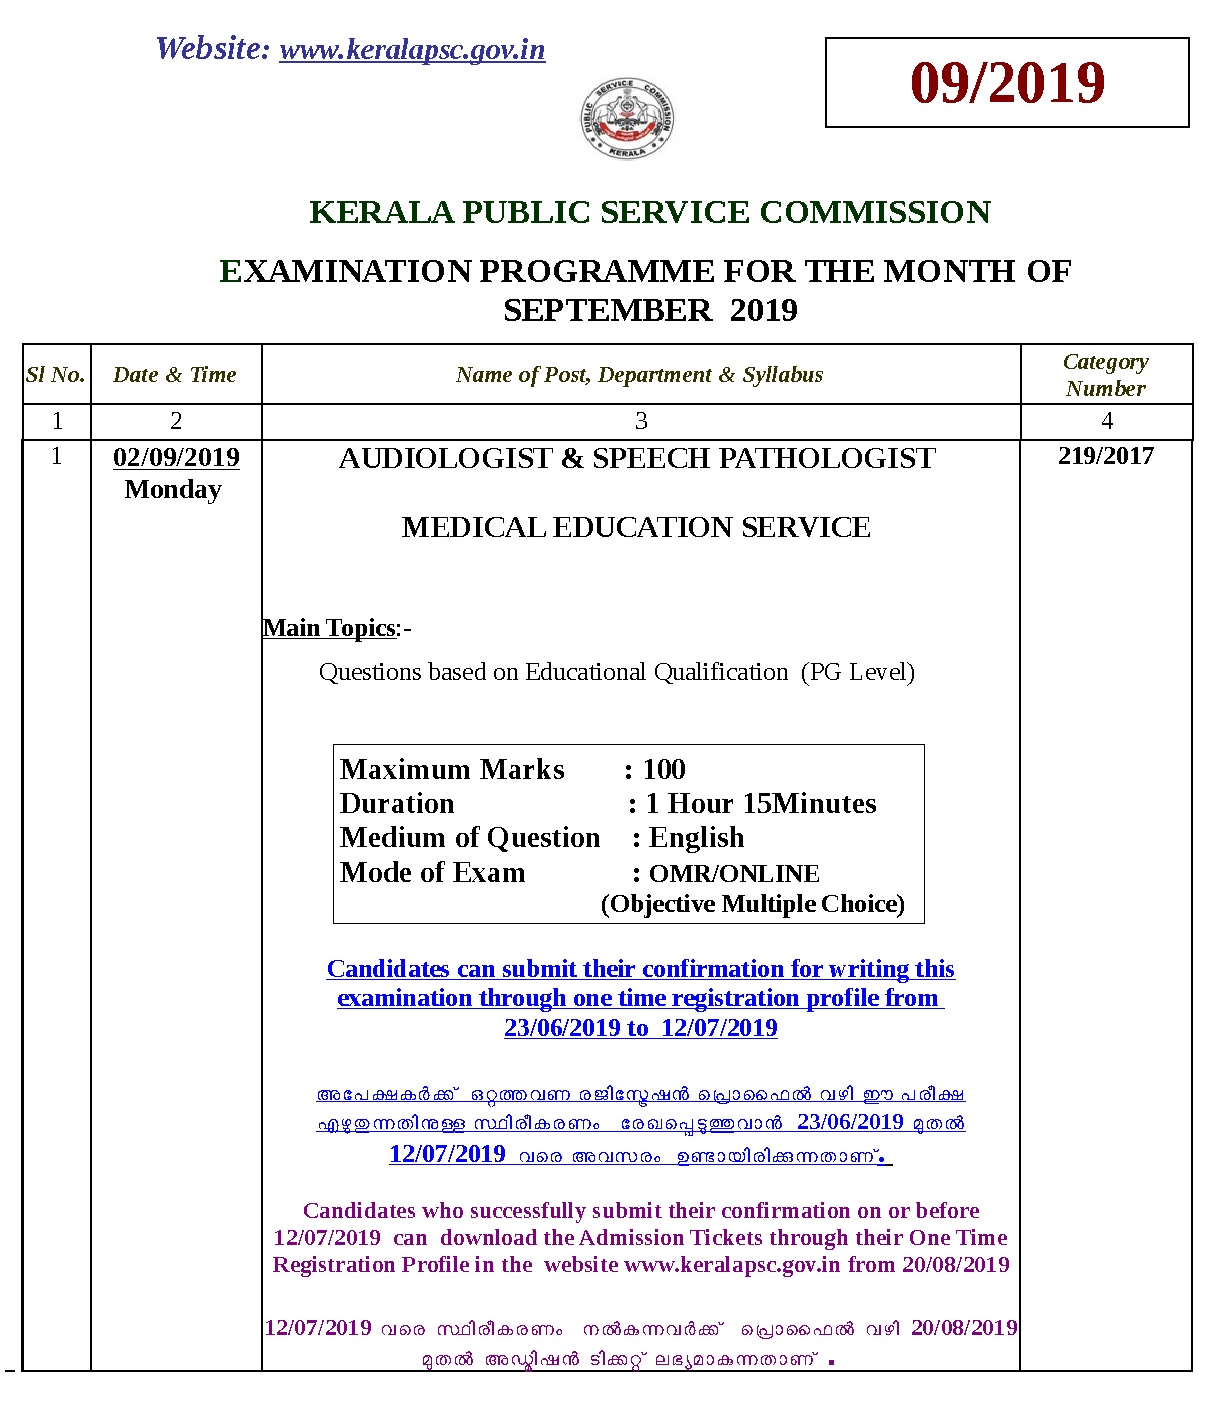 KPSC Examination Programme September 2019 - Notification Image 1